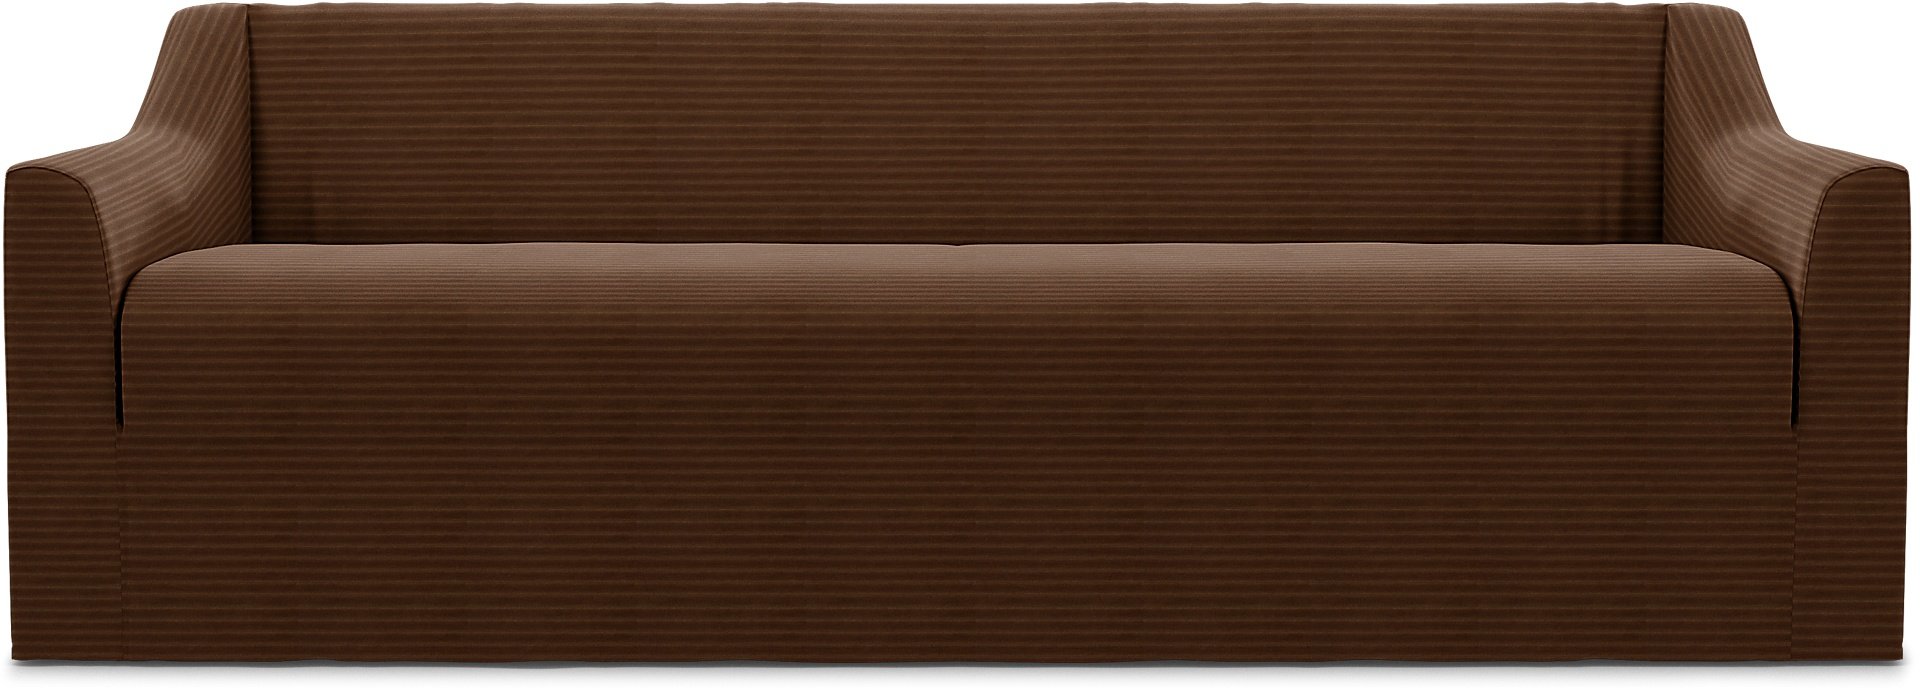 IKEA - Farlov 3 Seater Sofa Cover, Chocolate Brown, Corduroy - Bemz